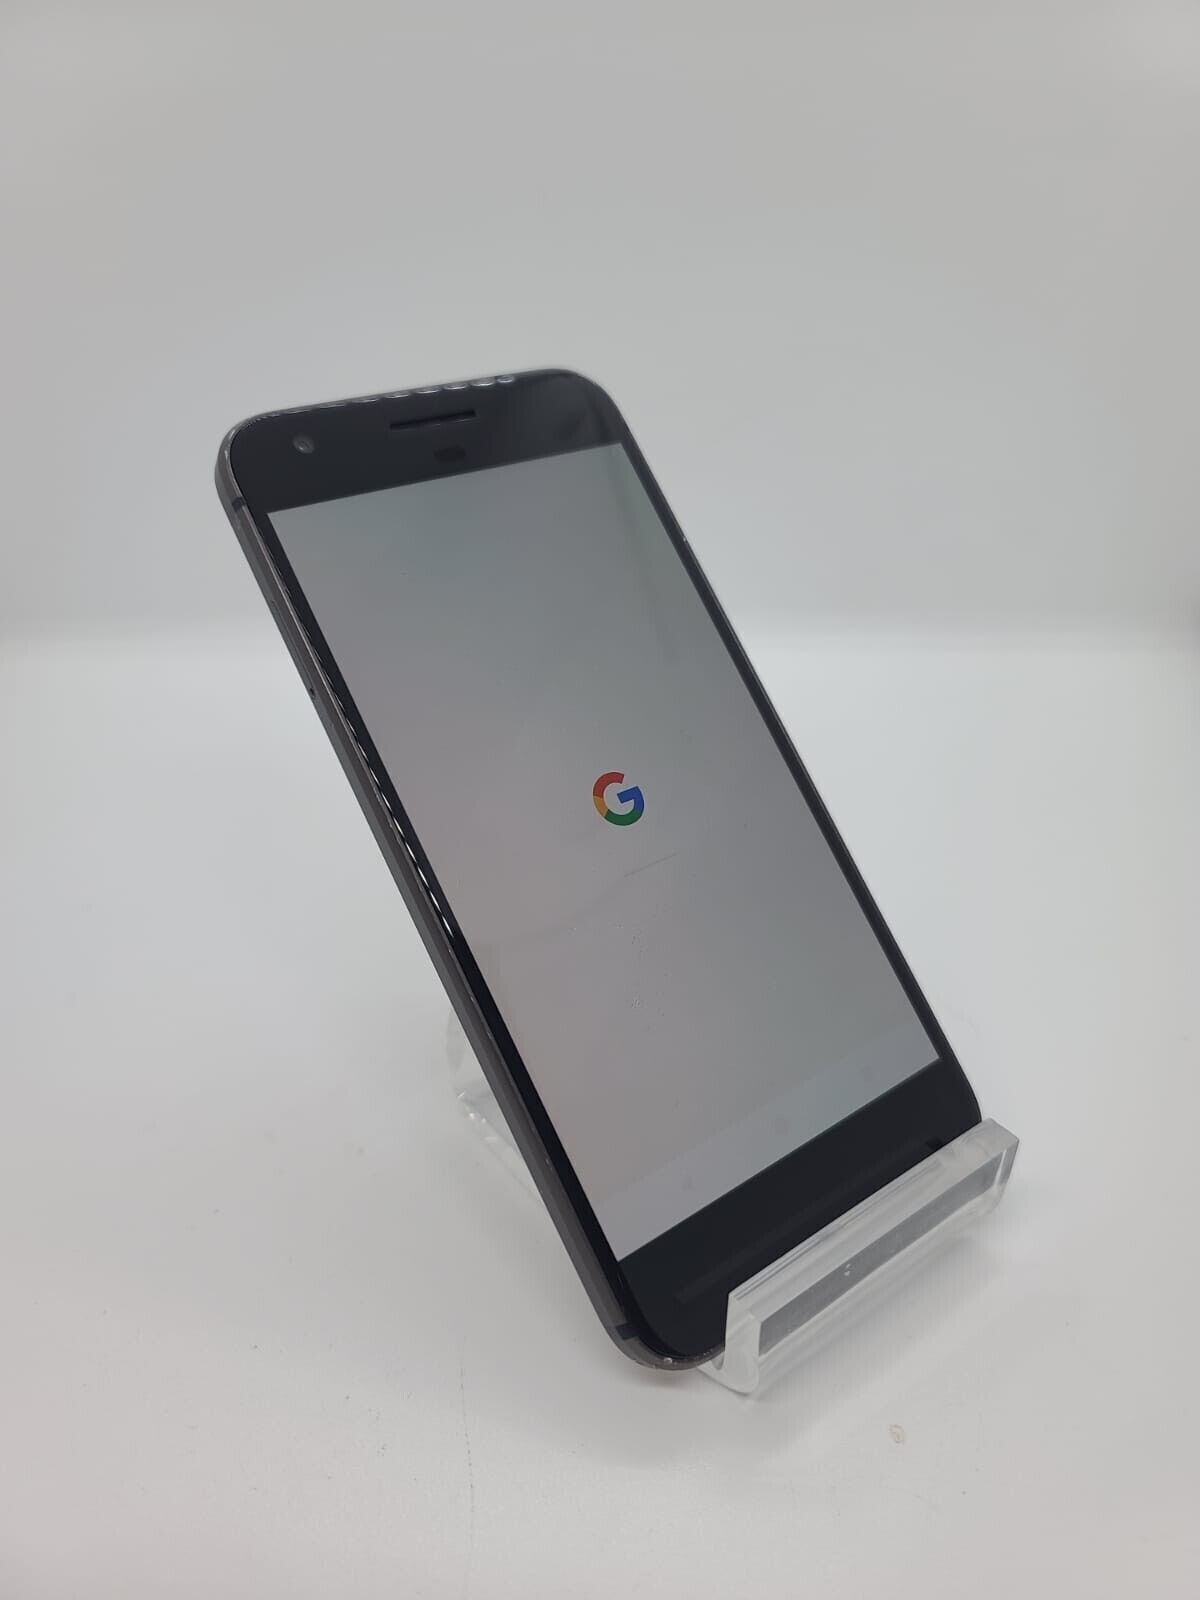 Google Pixel 32GB Unlocked Smartphone Unlockable Bootloader New Battery!